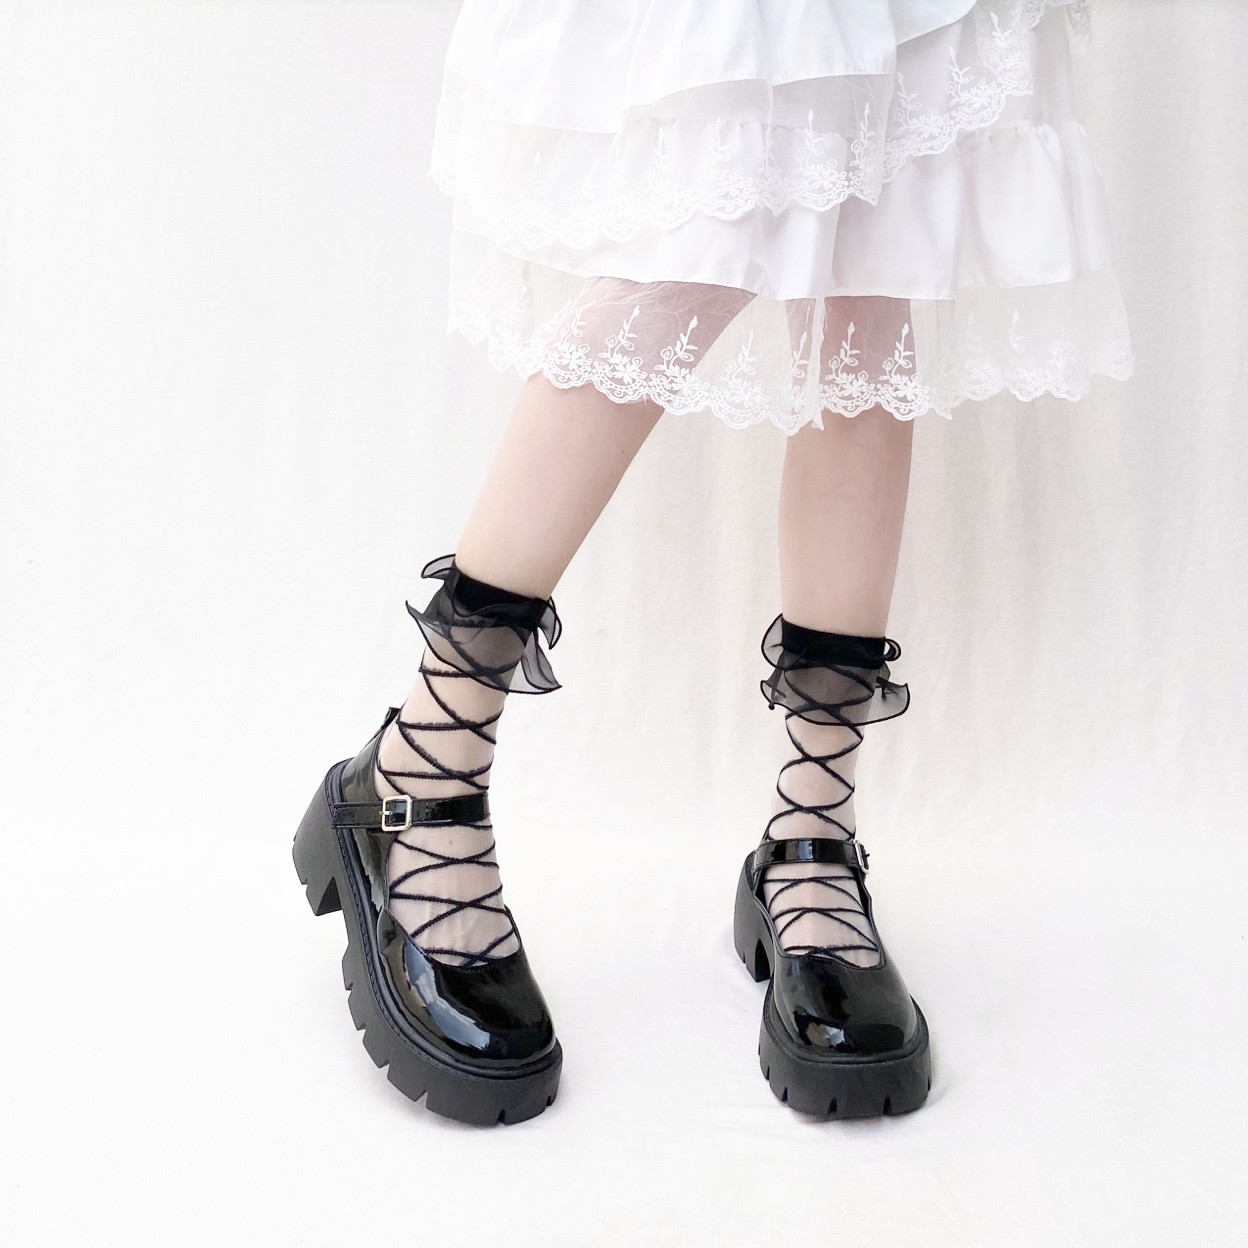 21 New Japanese Cross Spun Glass Tube Socks Cute Girl Lolita Lace Socks Summer Thin Crystal Socks